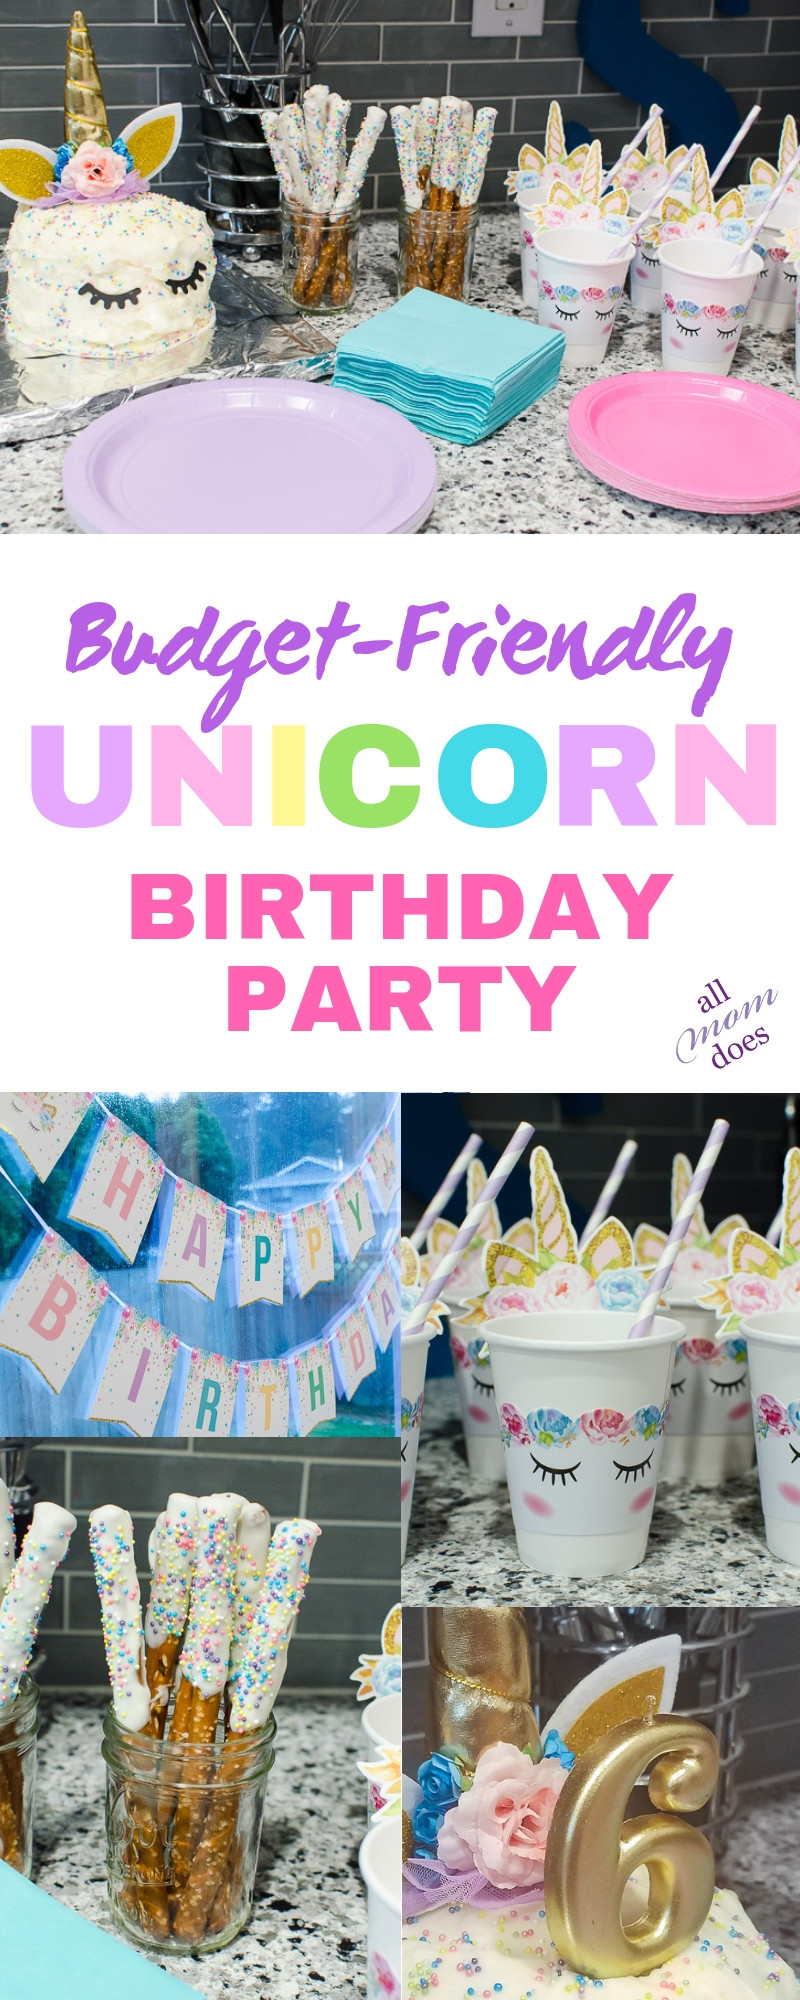 Unicorn Birthday Party Decorations Ideas
 Bud Friendly Unicorn Birthday Party